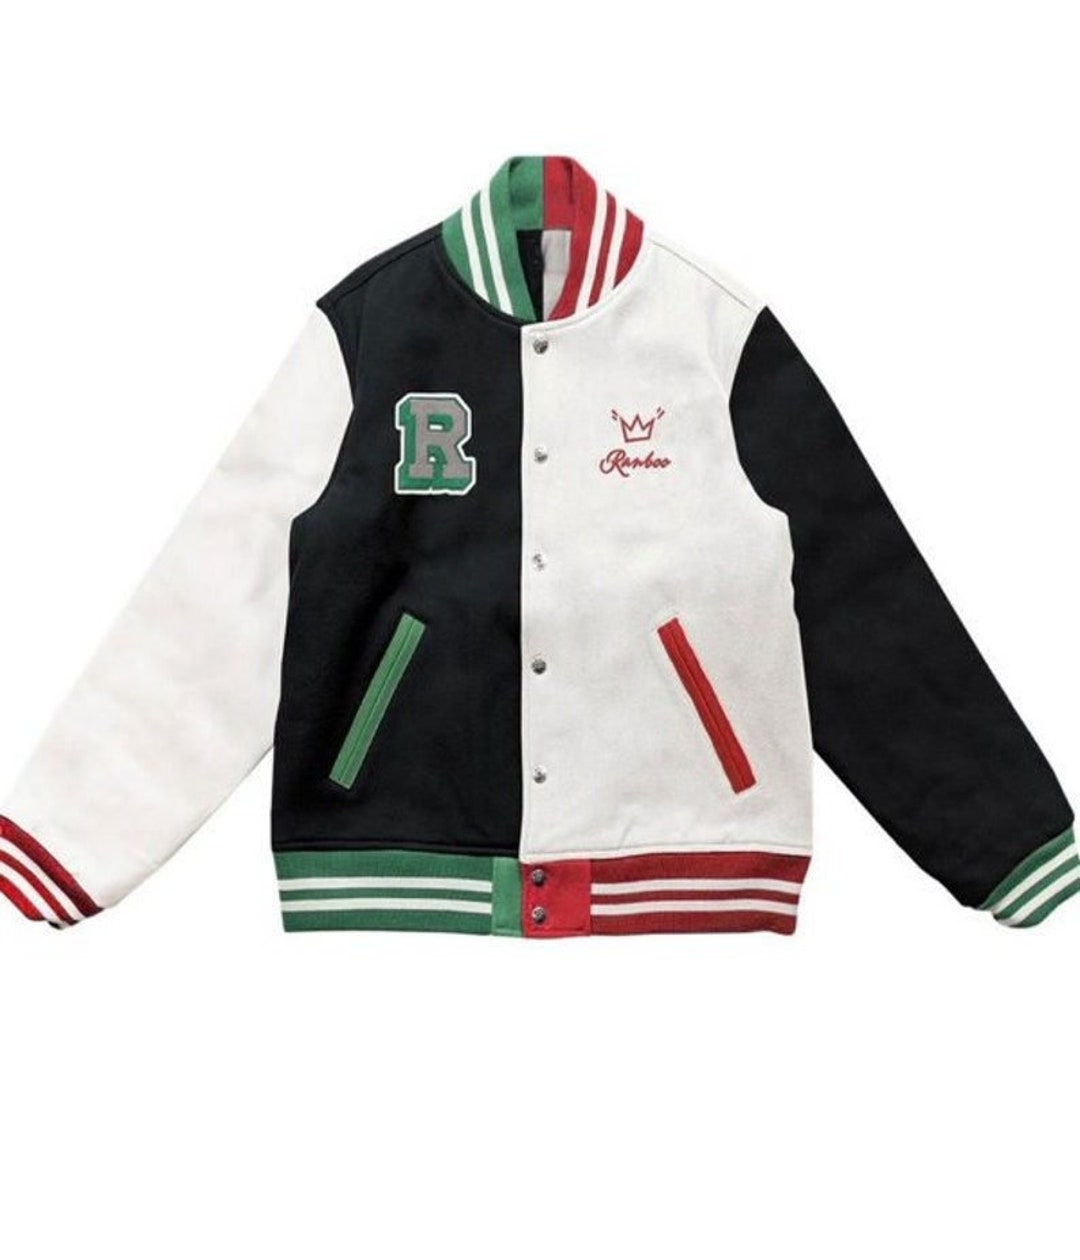 Men's Snap Tab Closure Green and White Varsity Jacket - Jackets Creator